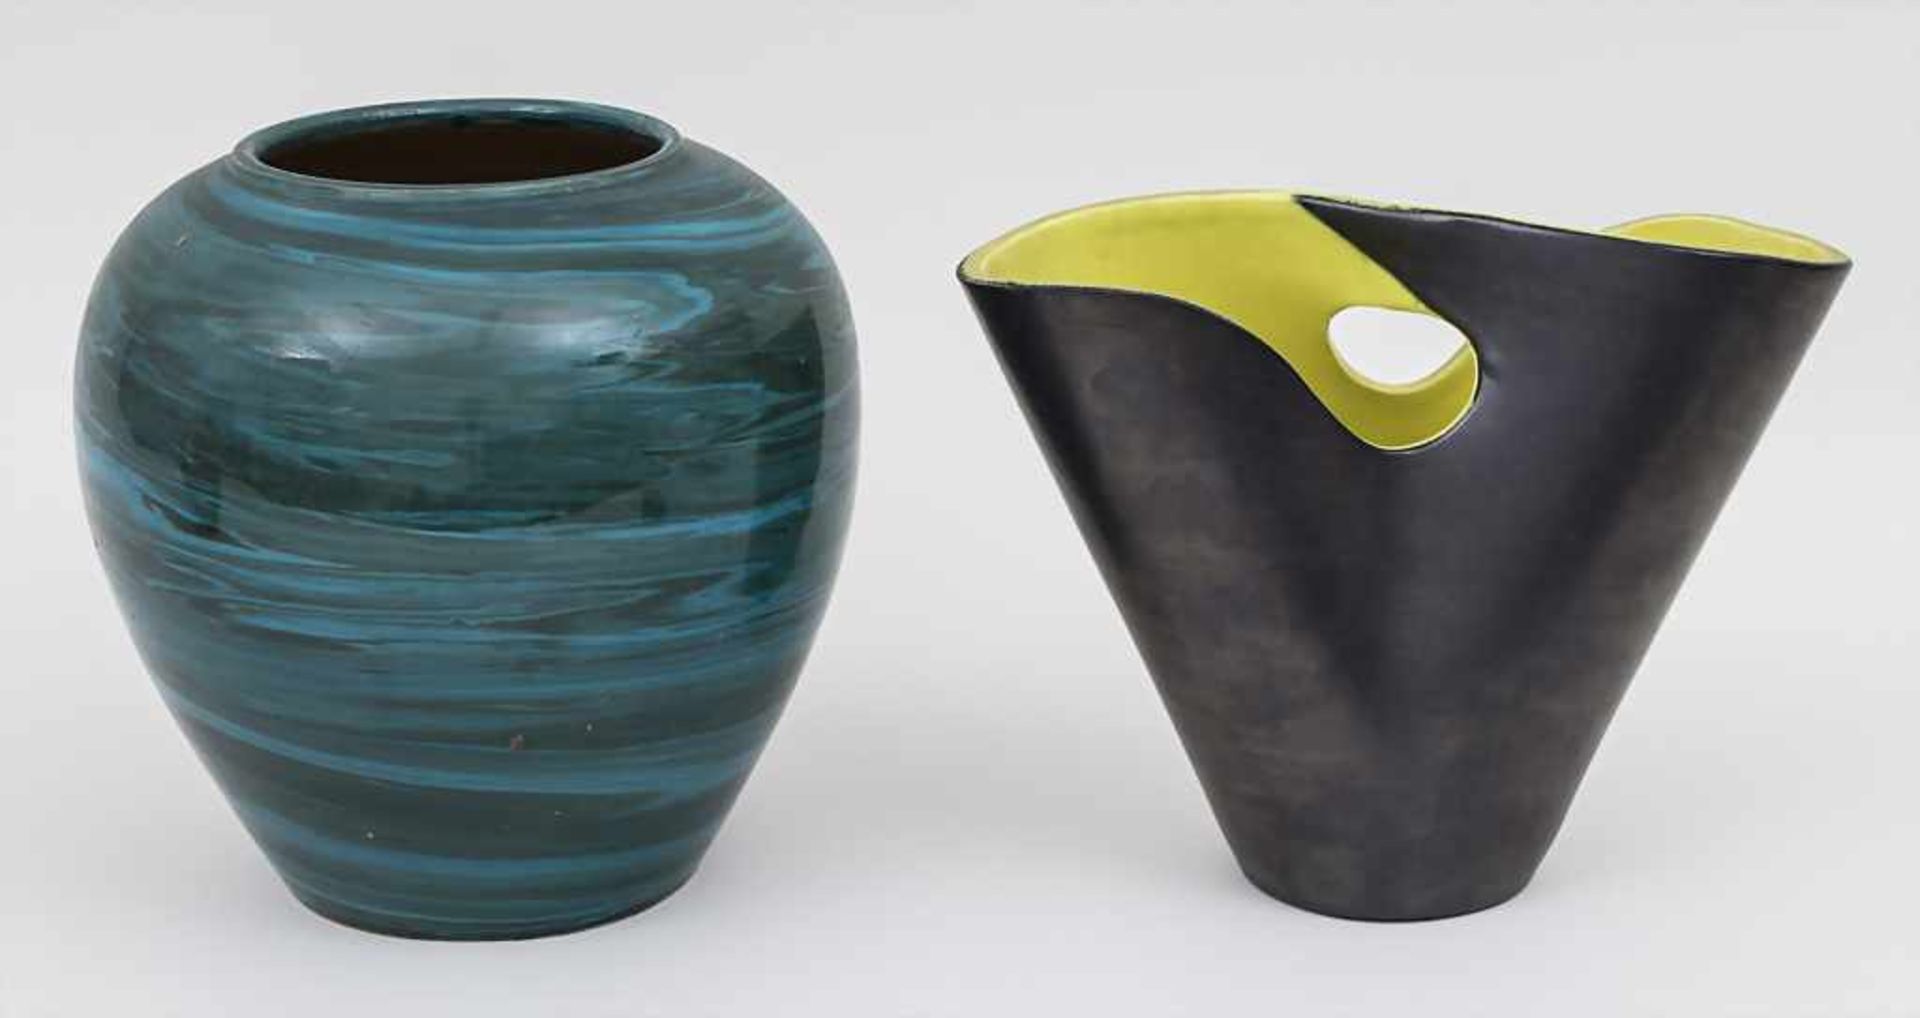 2 Keramik Vasen / 2 vases, Frankreich u. Elchinger, Mitte 20. Jh. Material: Keramik, glasiert,